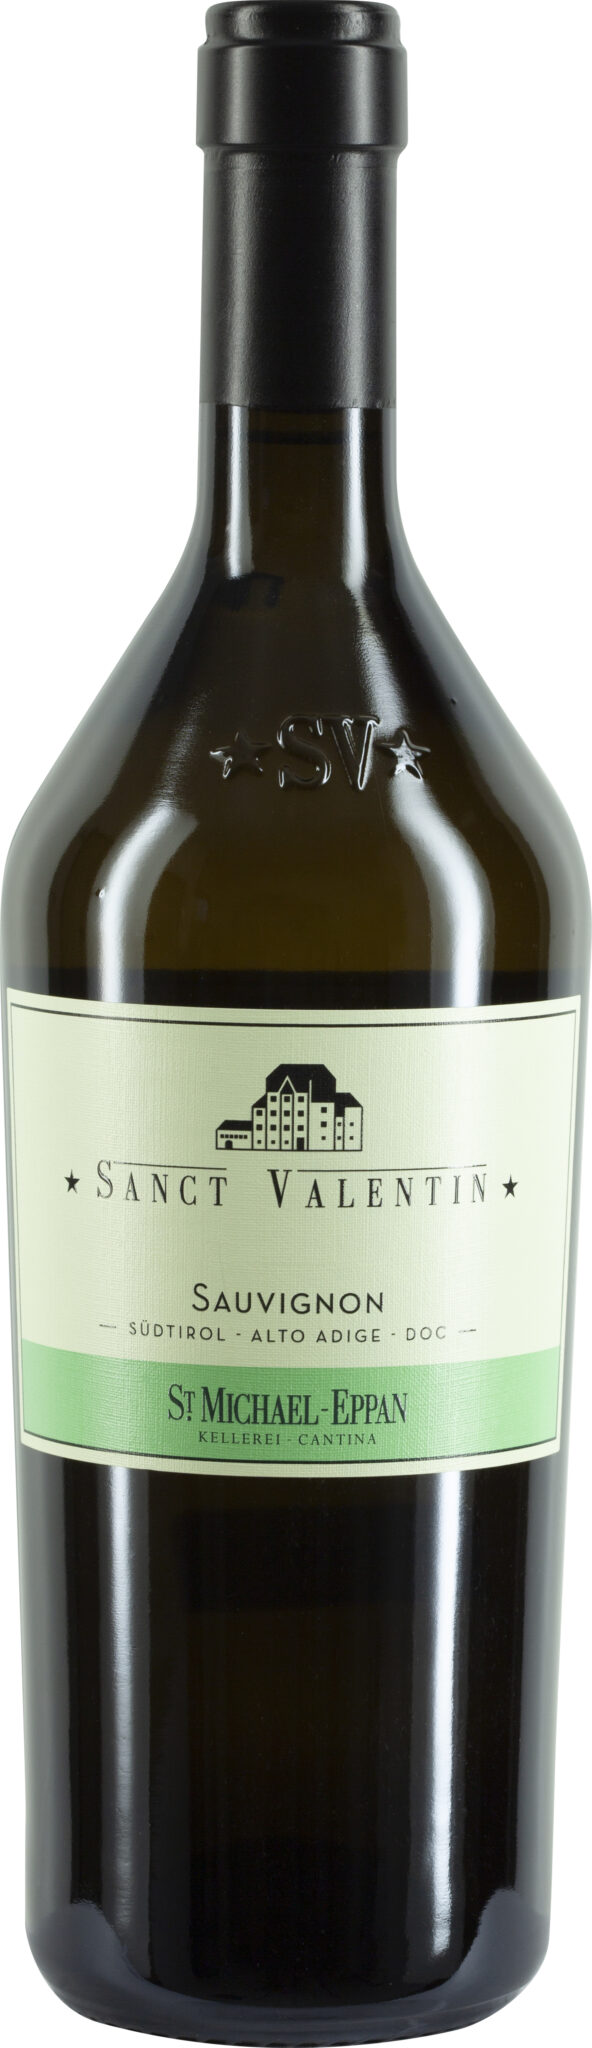 St. Michael-Eppan - Sanct Valentin, Sauvignon Blanc Alto Adige DOC